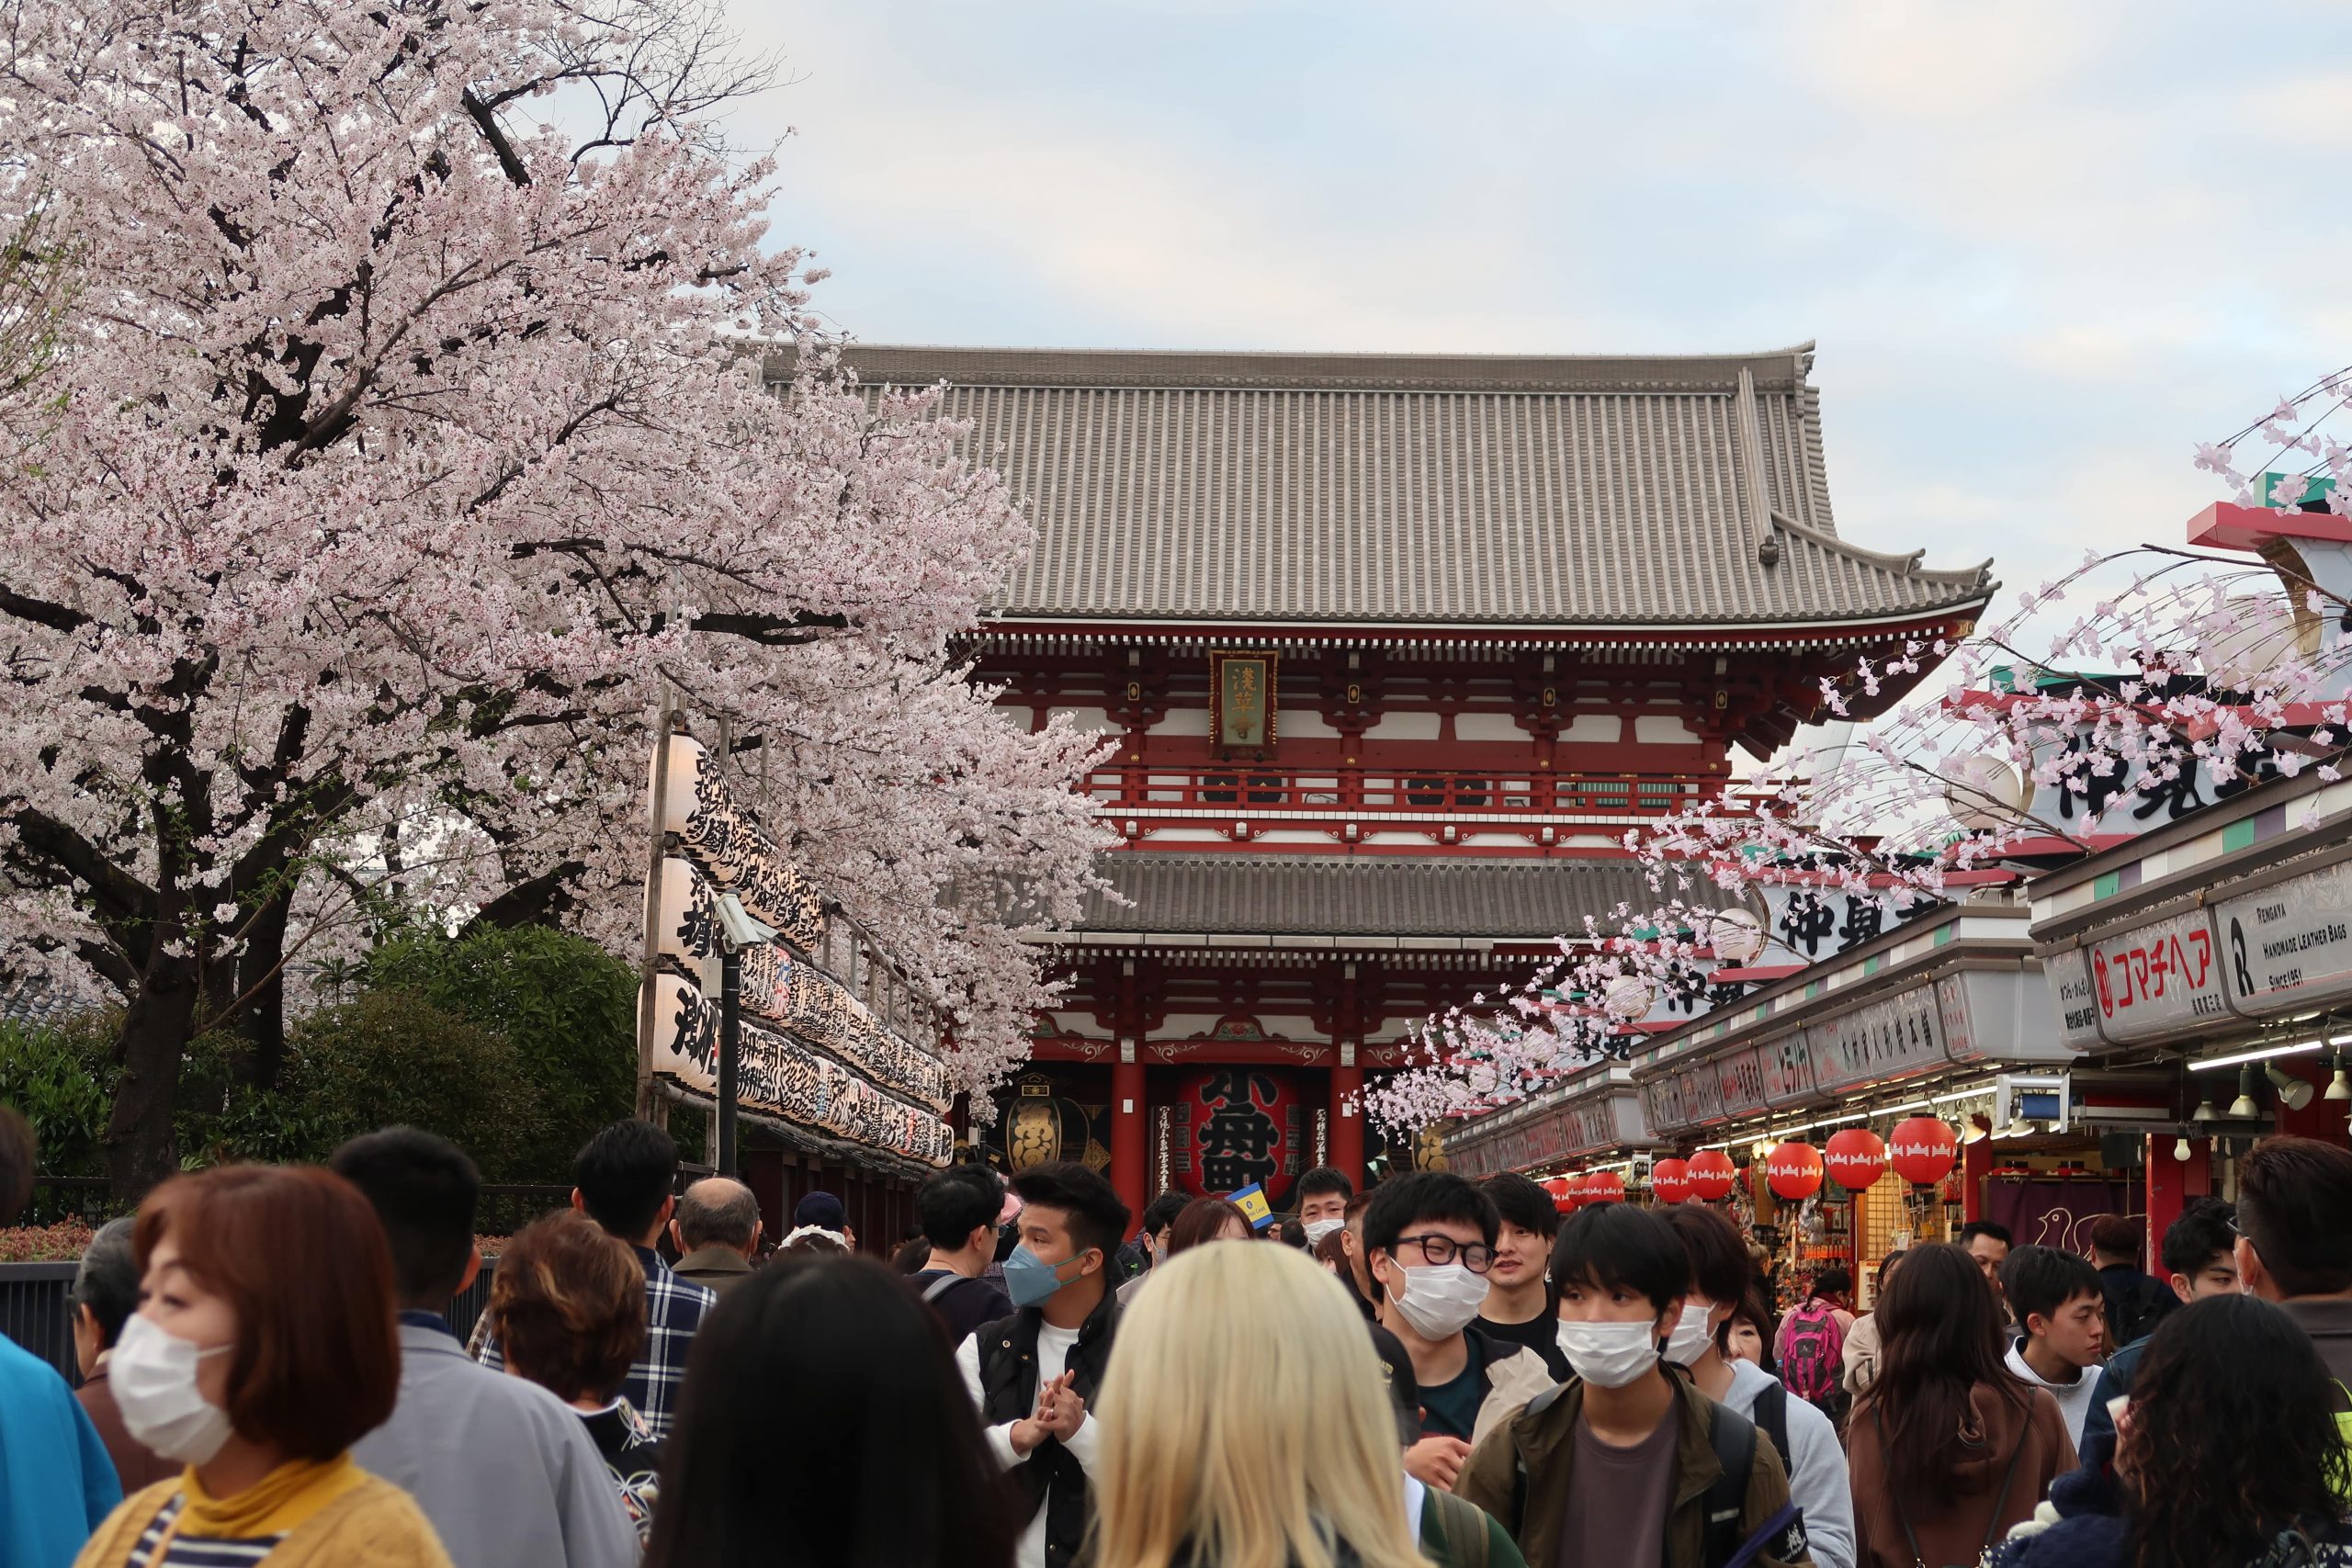 senso-ji temple hozomon gate tokyo cherry blossoms things to see and do-min